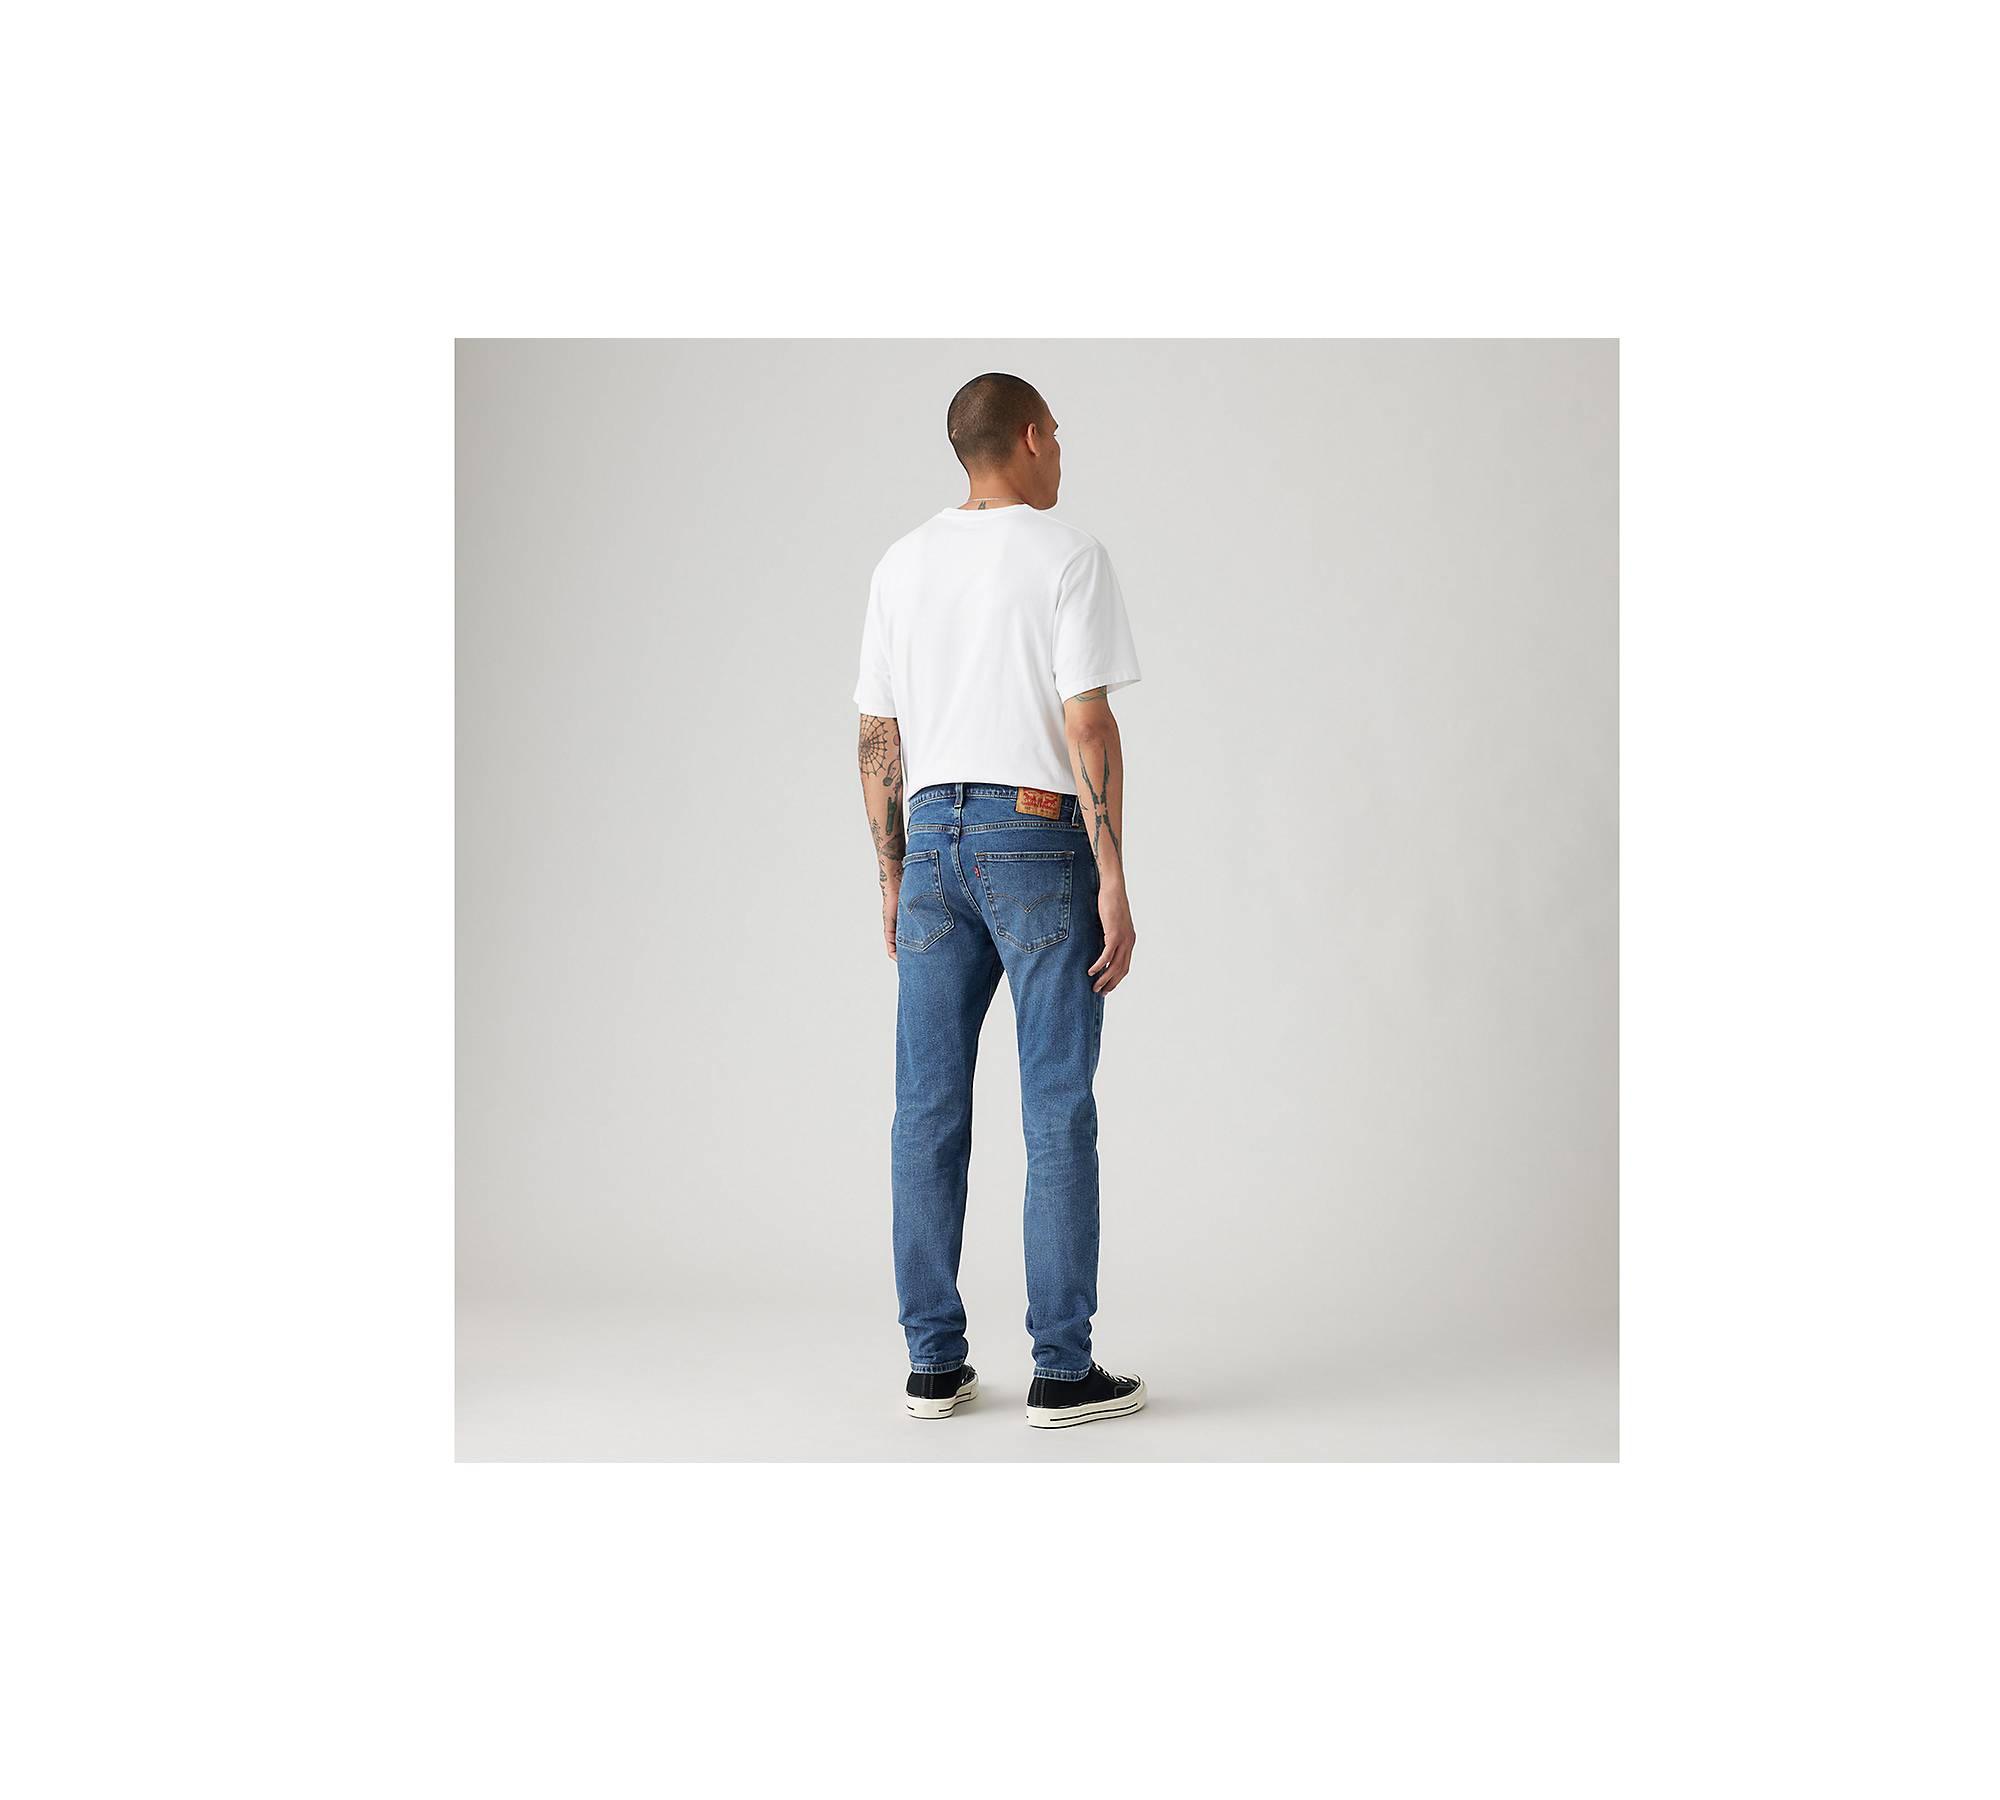 SELECT SIZE - Levi's 512 Slim Taper Jeans - light to medium wash